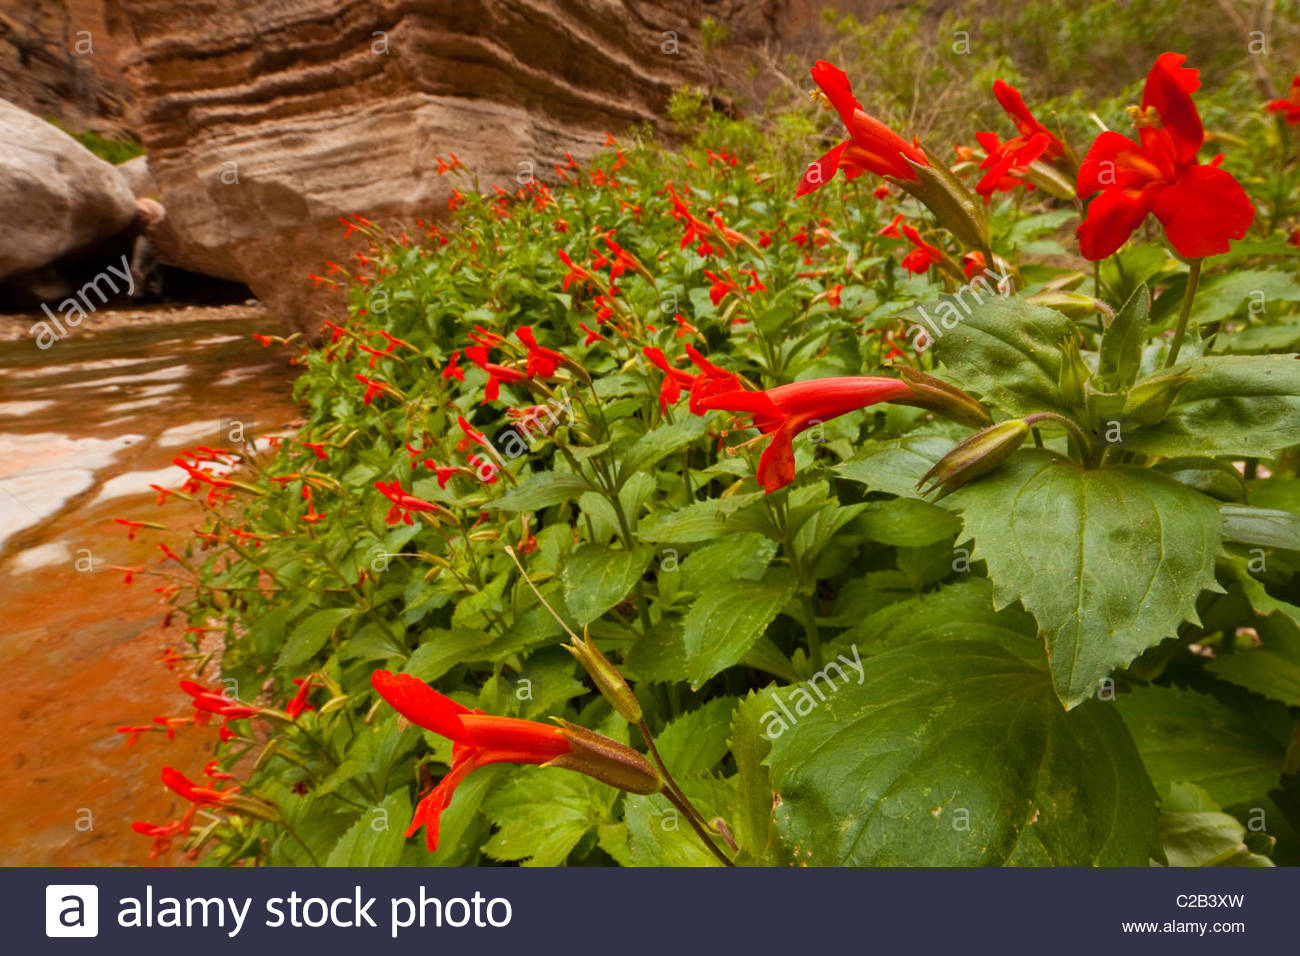 Crimson monkey flower grows in a desert canyon. Stock Photo